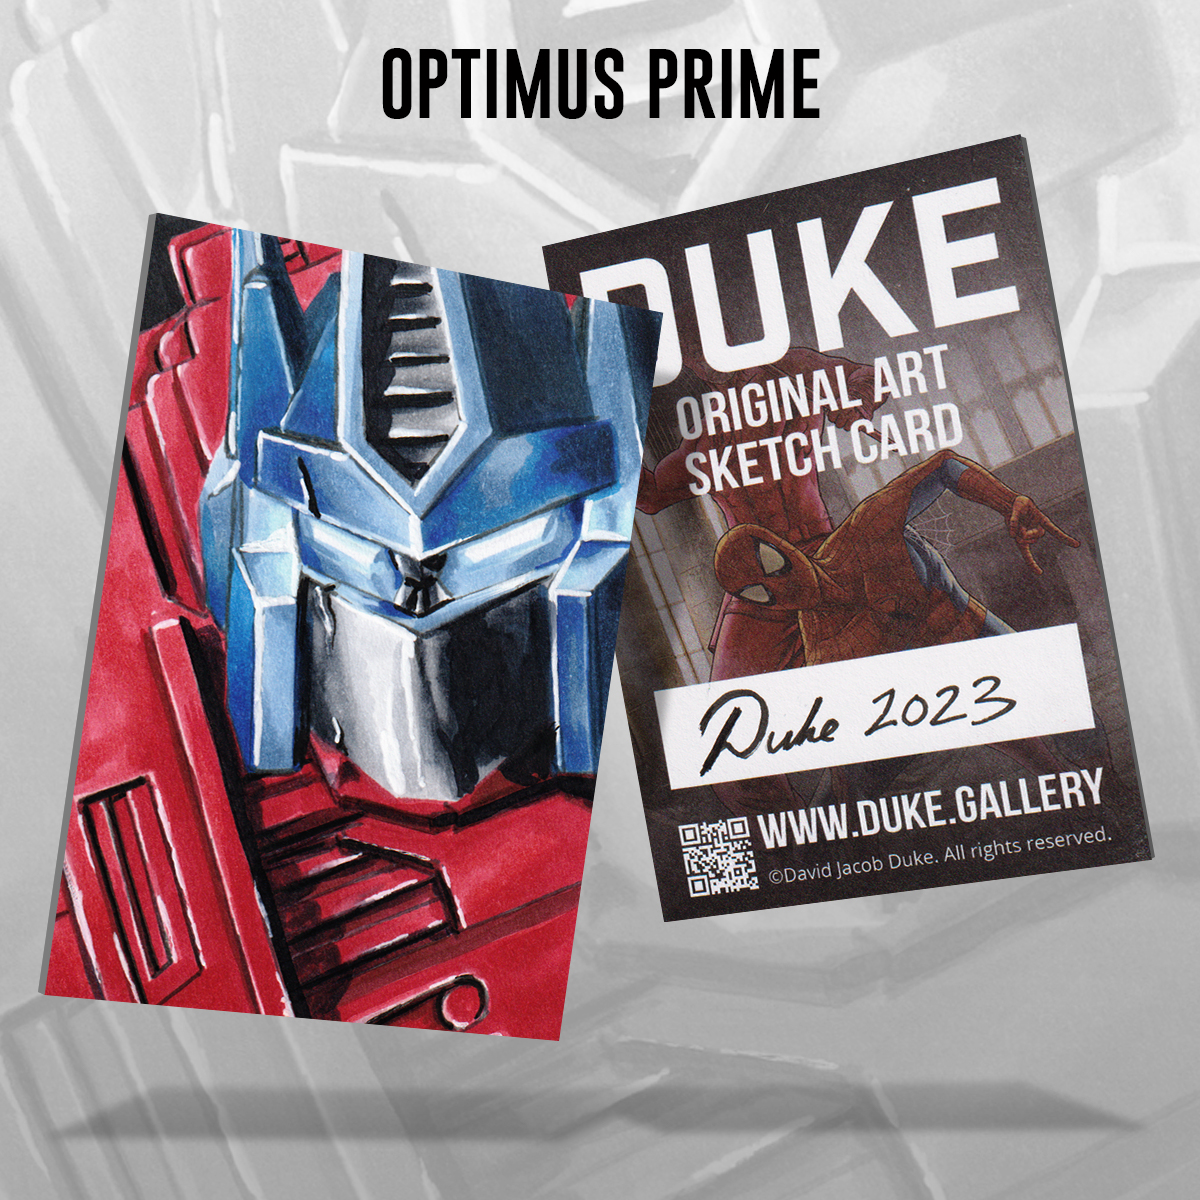 Optimus Prime Sketch Card by Duke